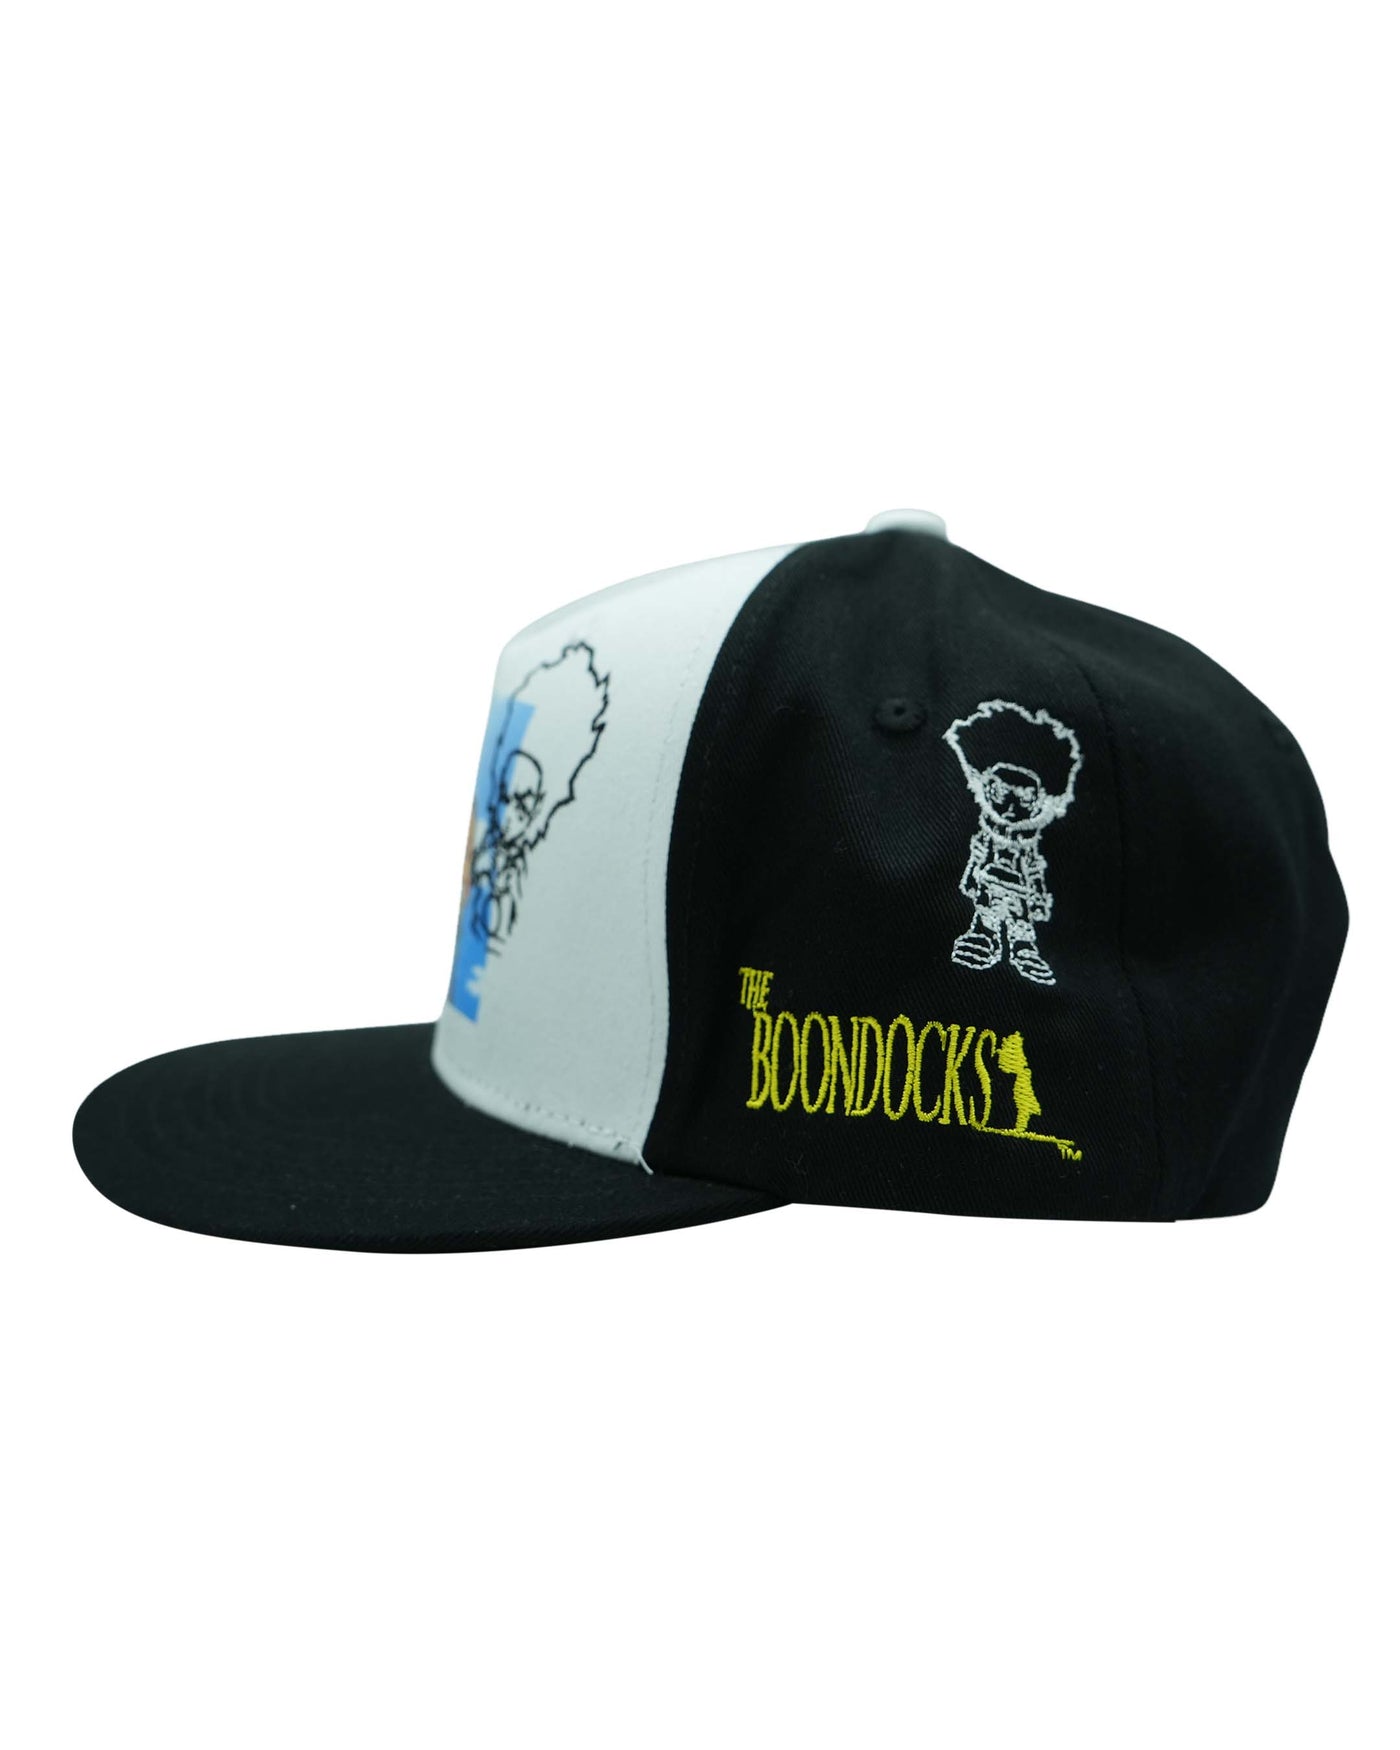 The Boondocks Gold Winners Black Snapback Hat